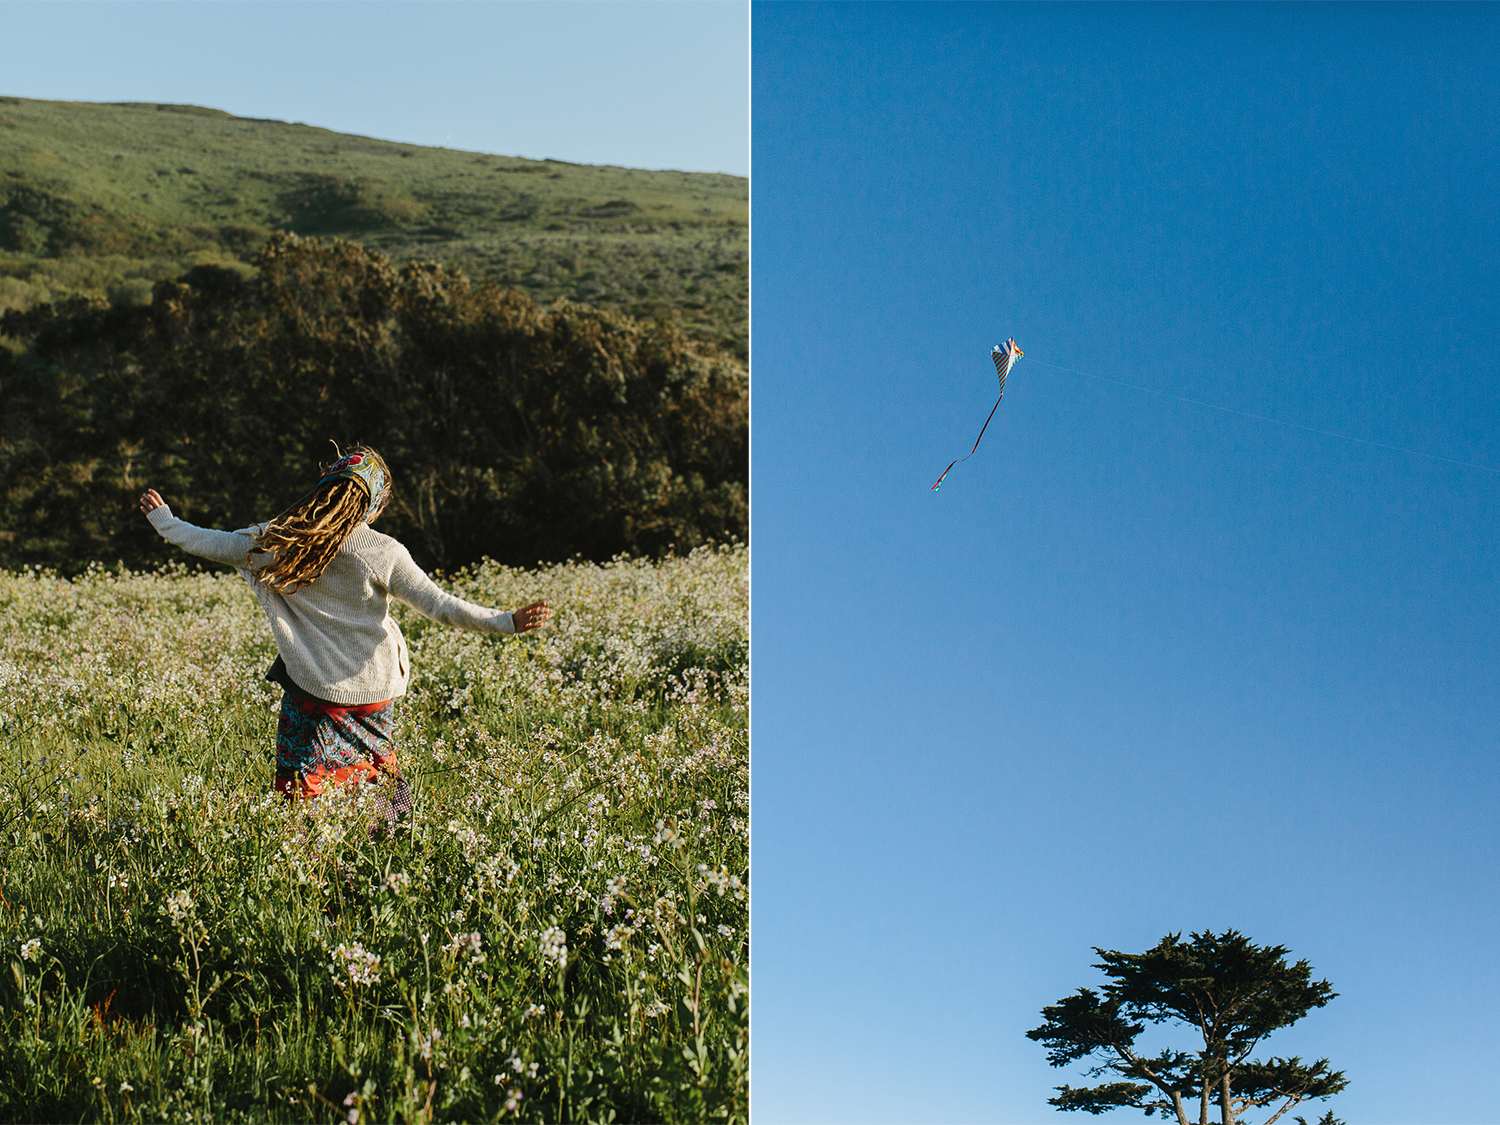 pierce-point-ranch-flying-kites.jpg